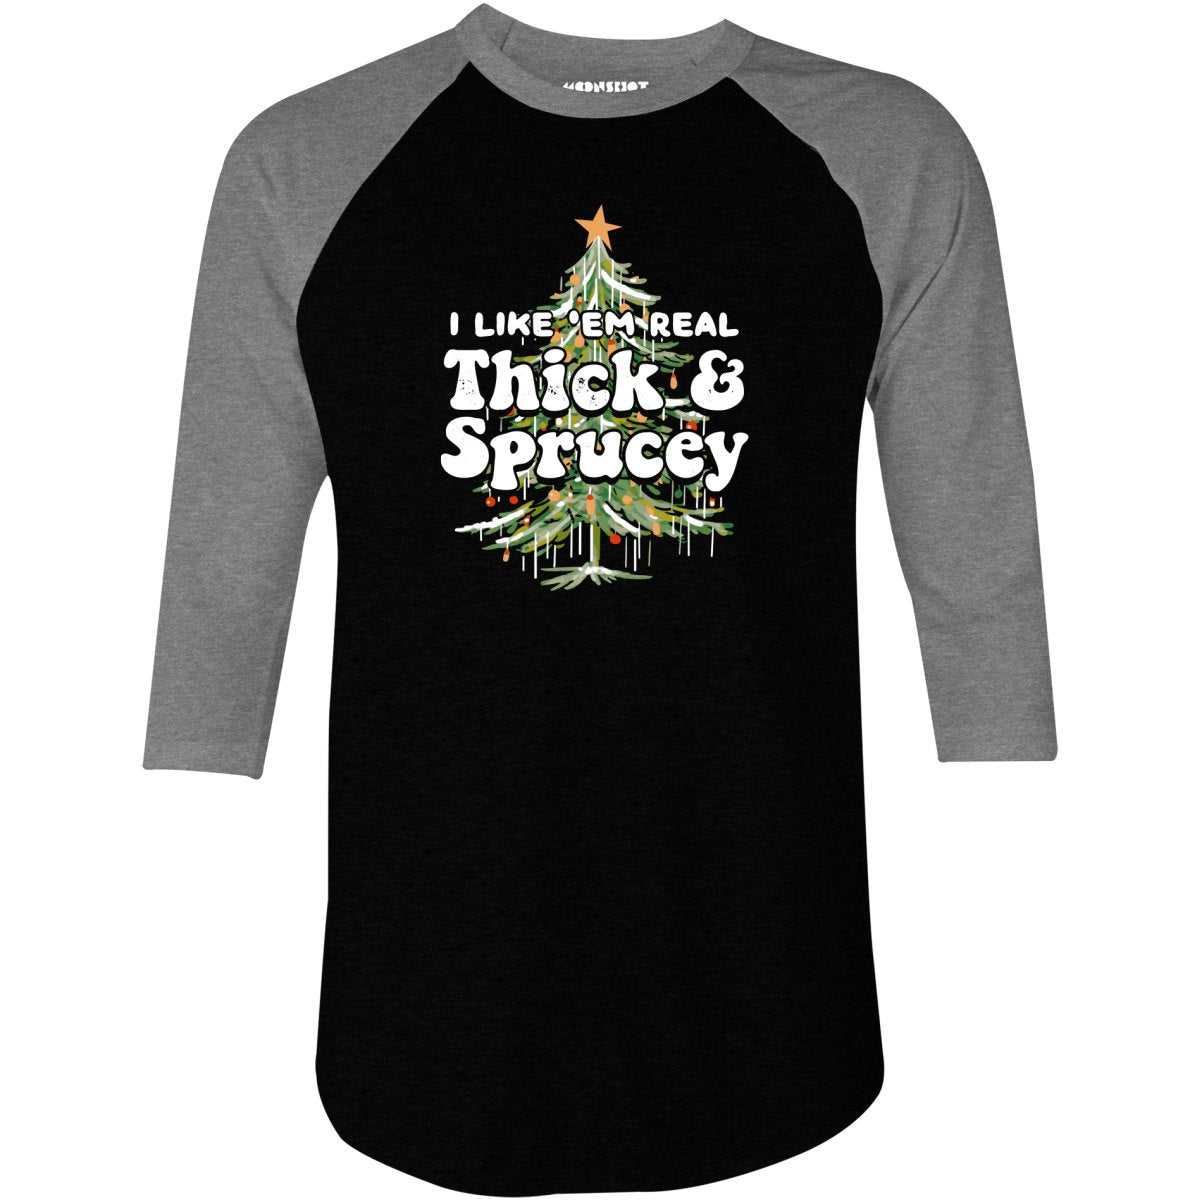 I Like em Real Thick and Sprucey - 3/4 Sleeve Raglan T-Shirt